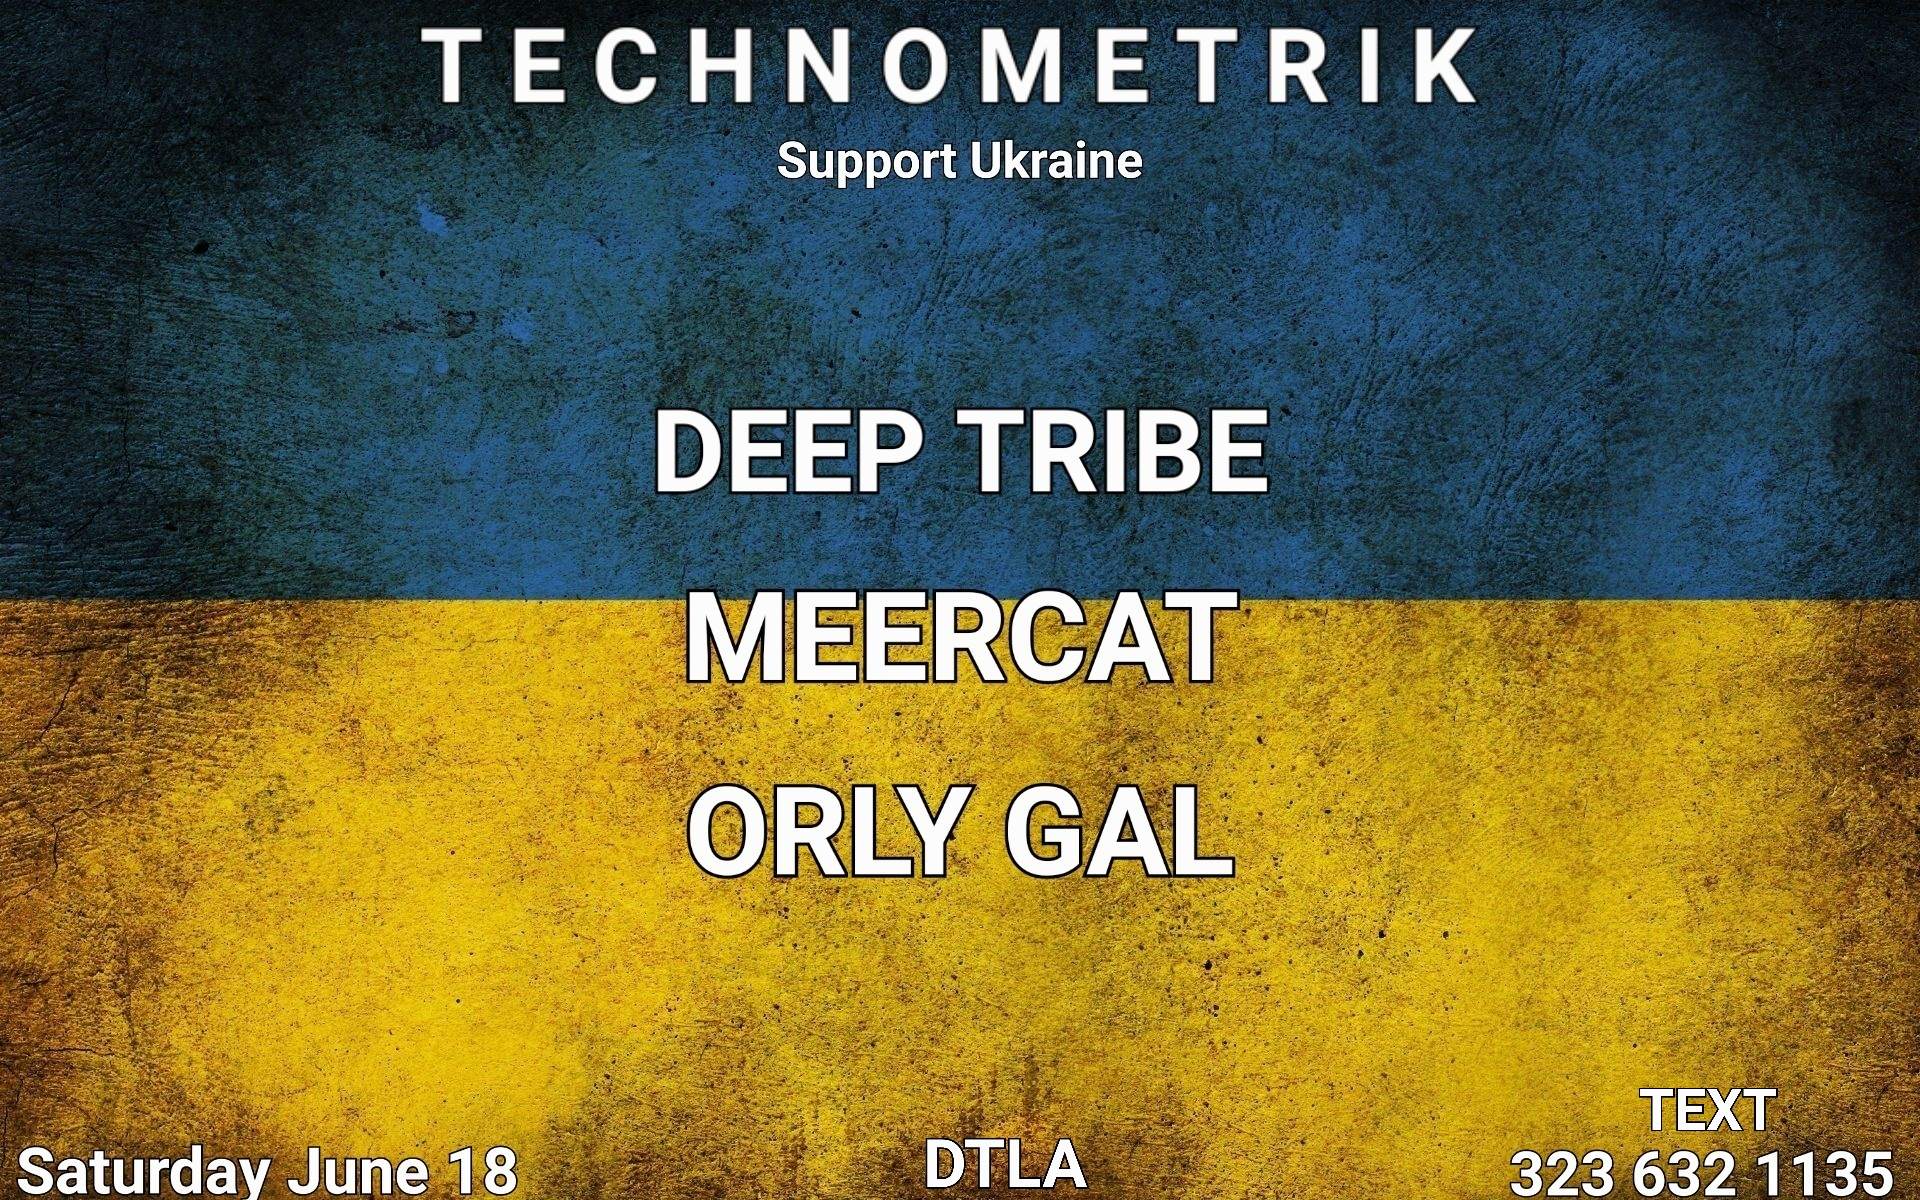 TECHNOMETRIK Support Ukraine - フライヤー表